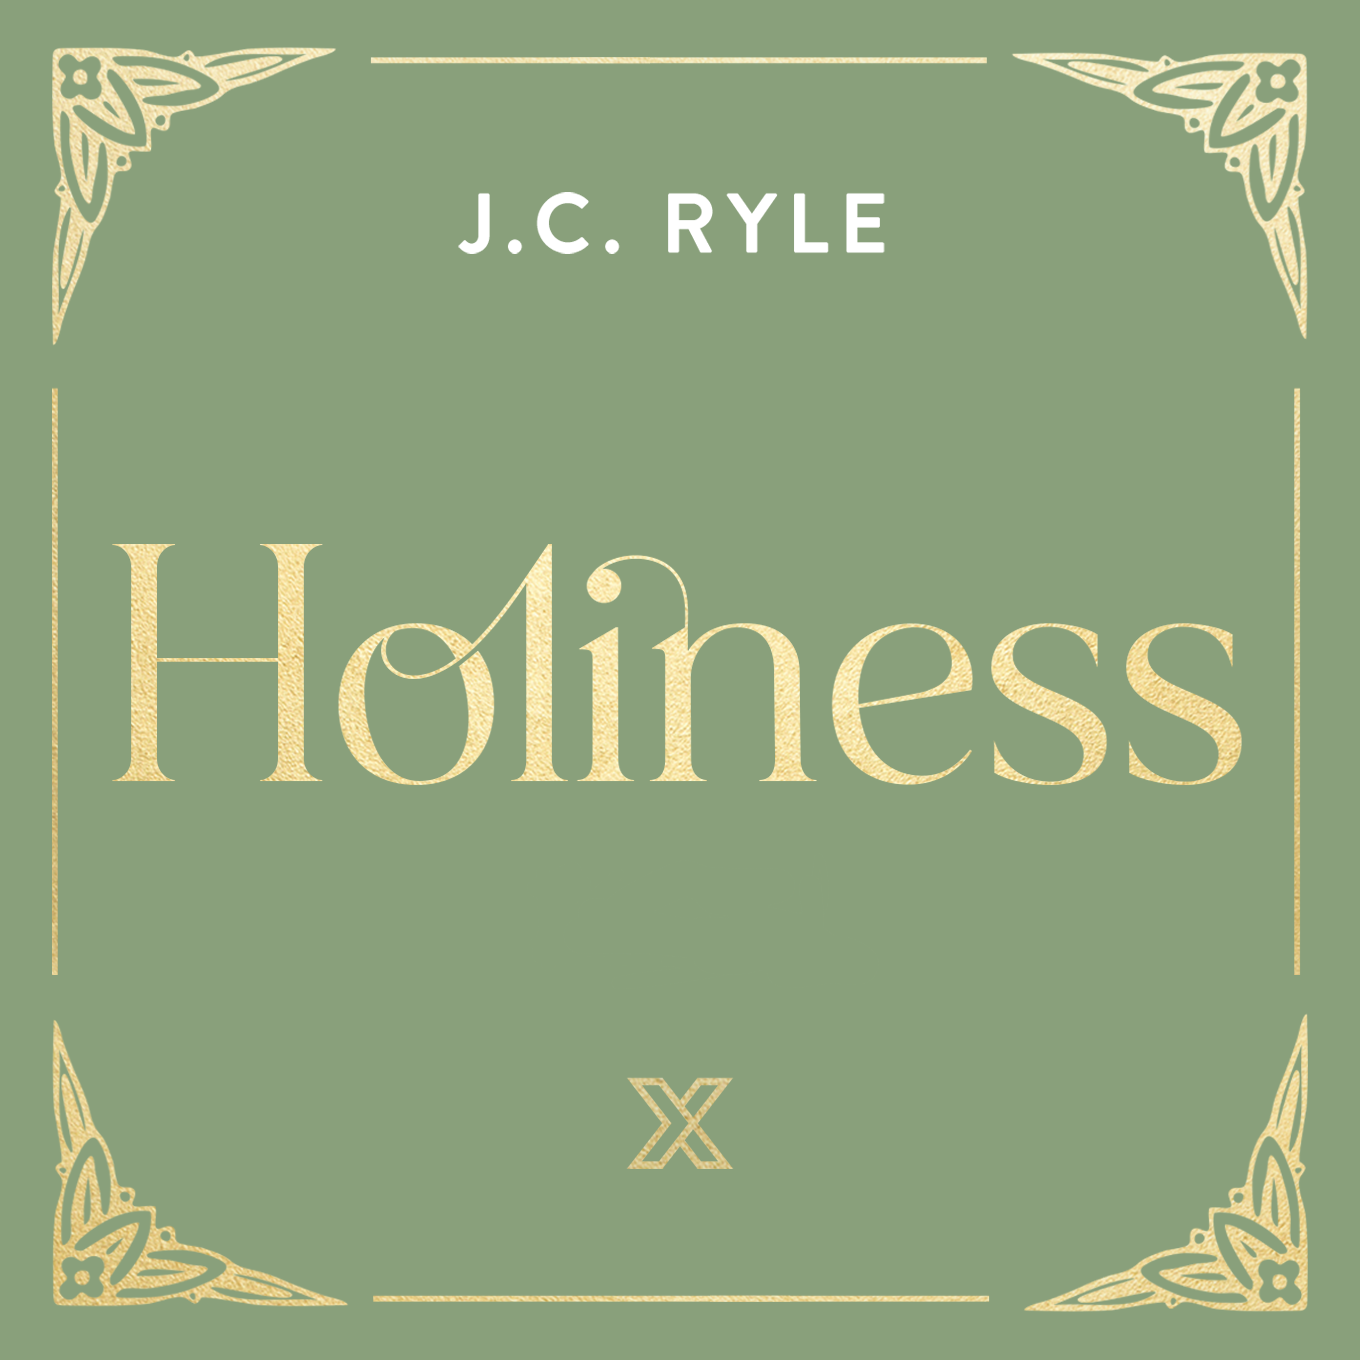 Holiness Audiobook